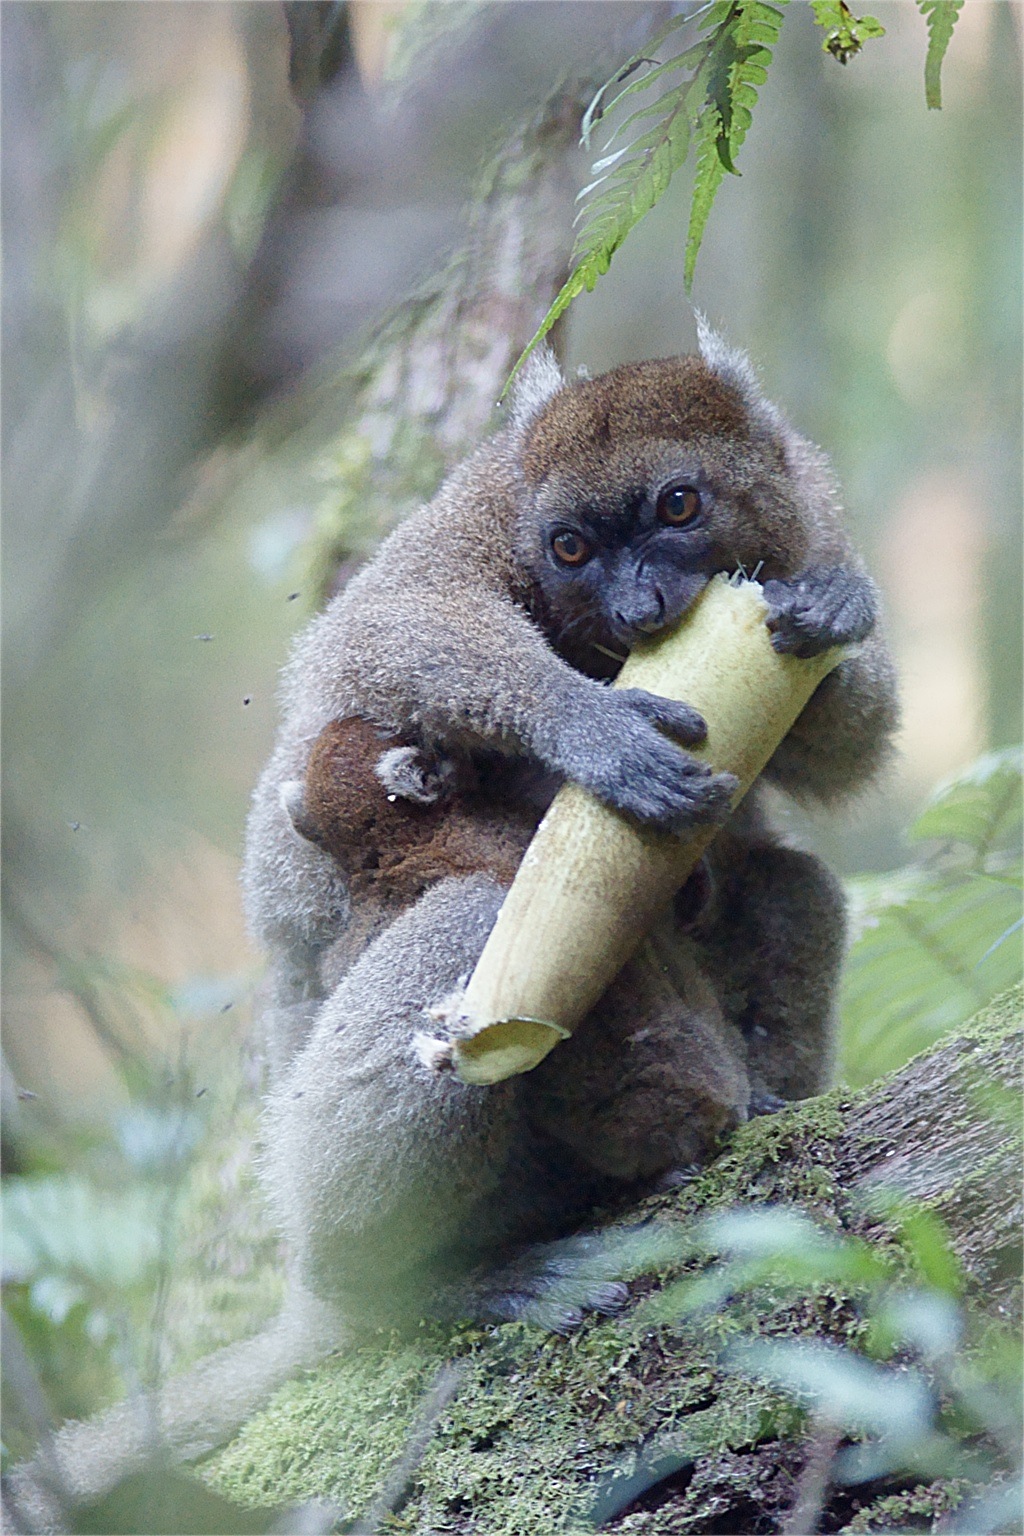 A greater bamboo lemur eats the tough culm (trunk) of bamboo.